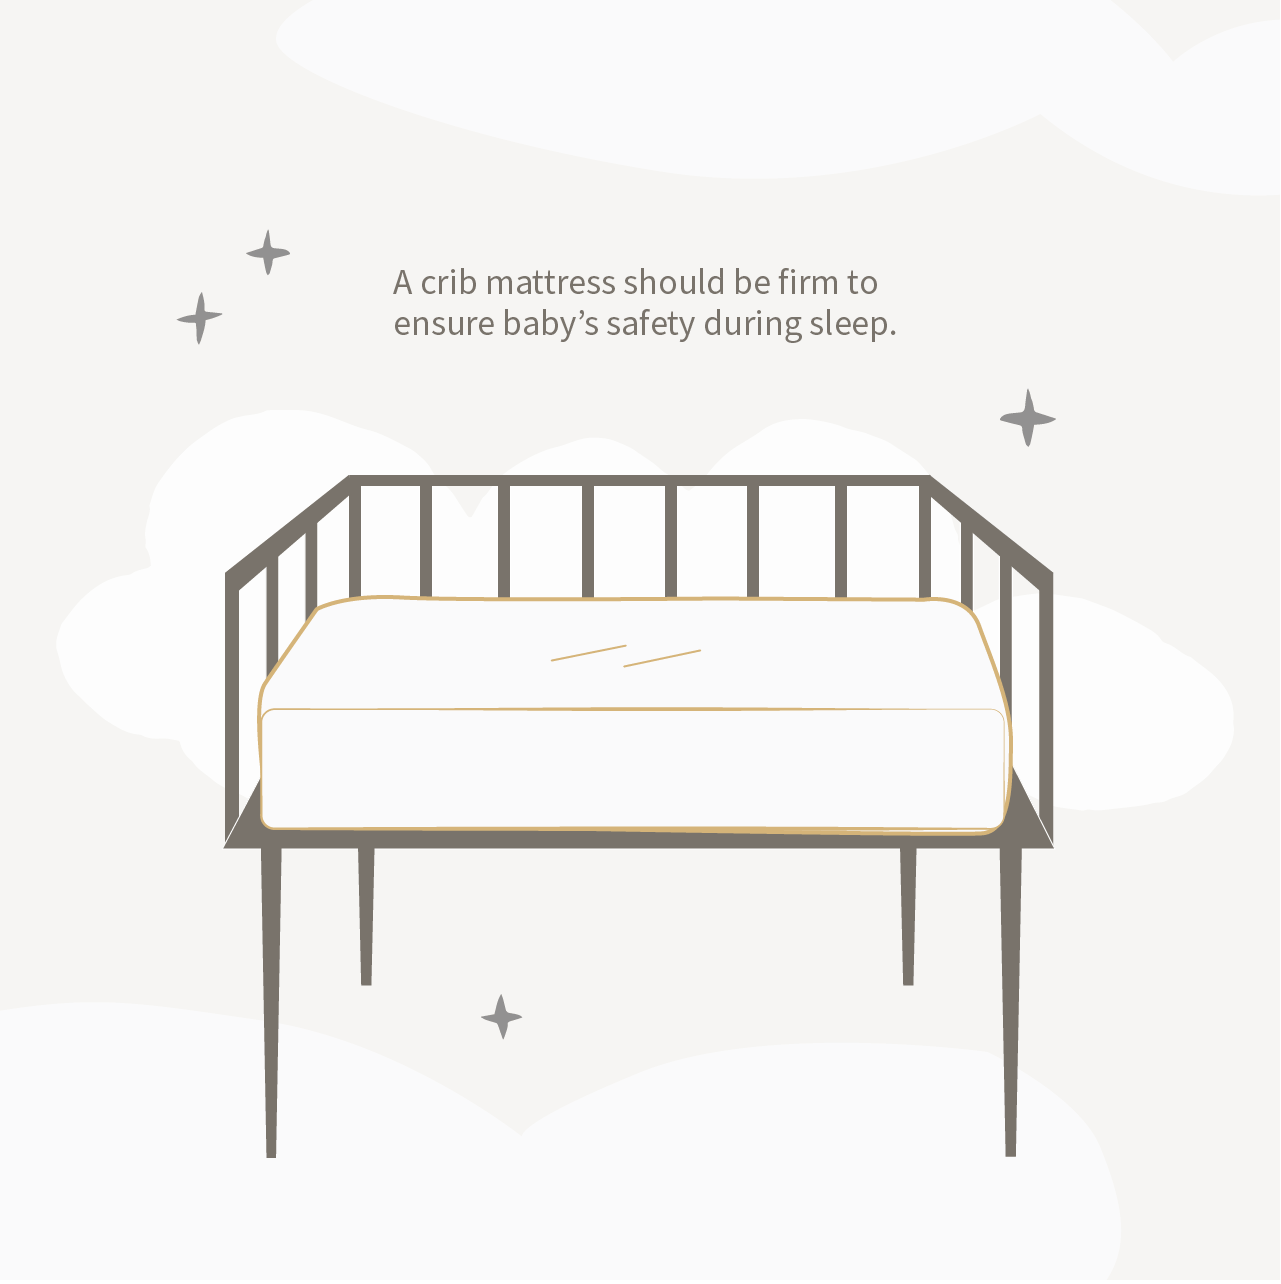 illustration of crib mattress in crib showing importance of mattress firmness